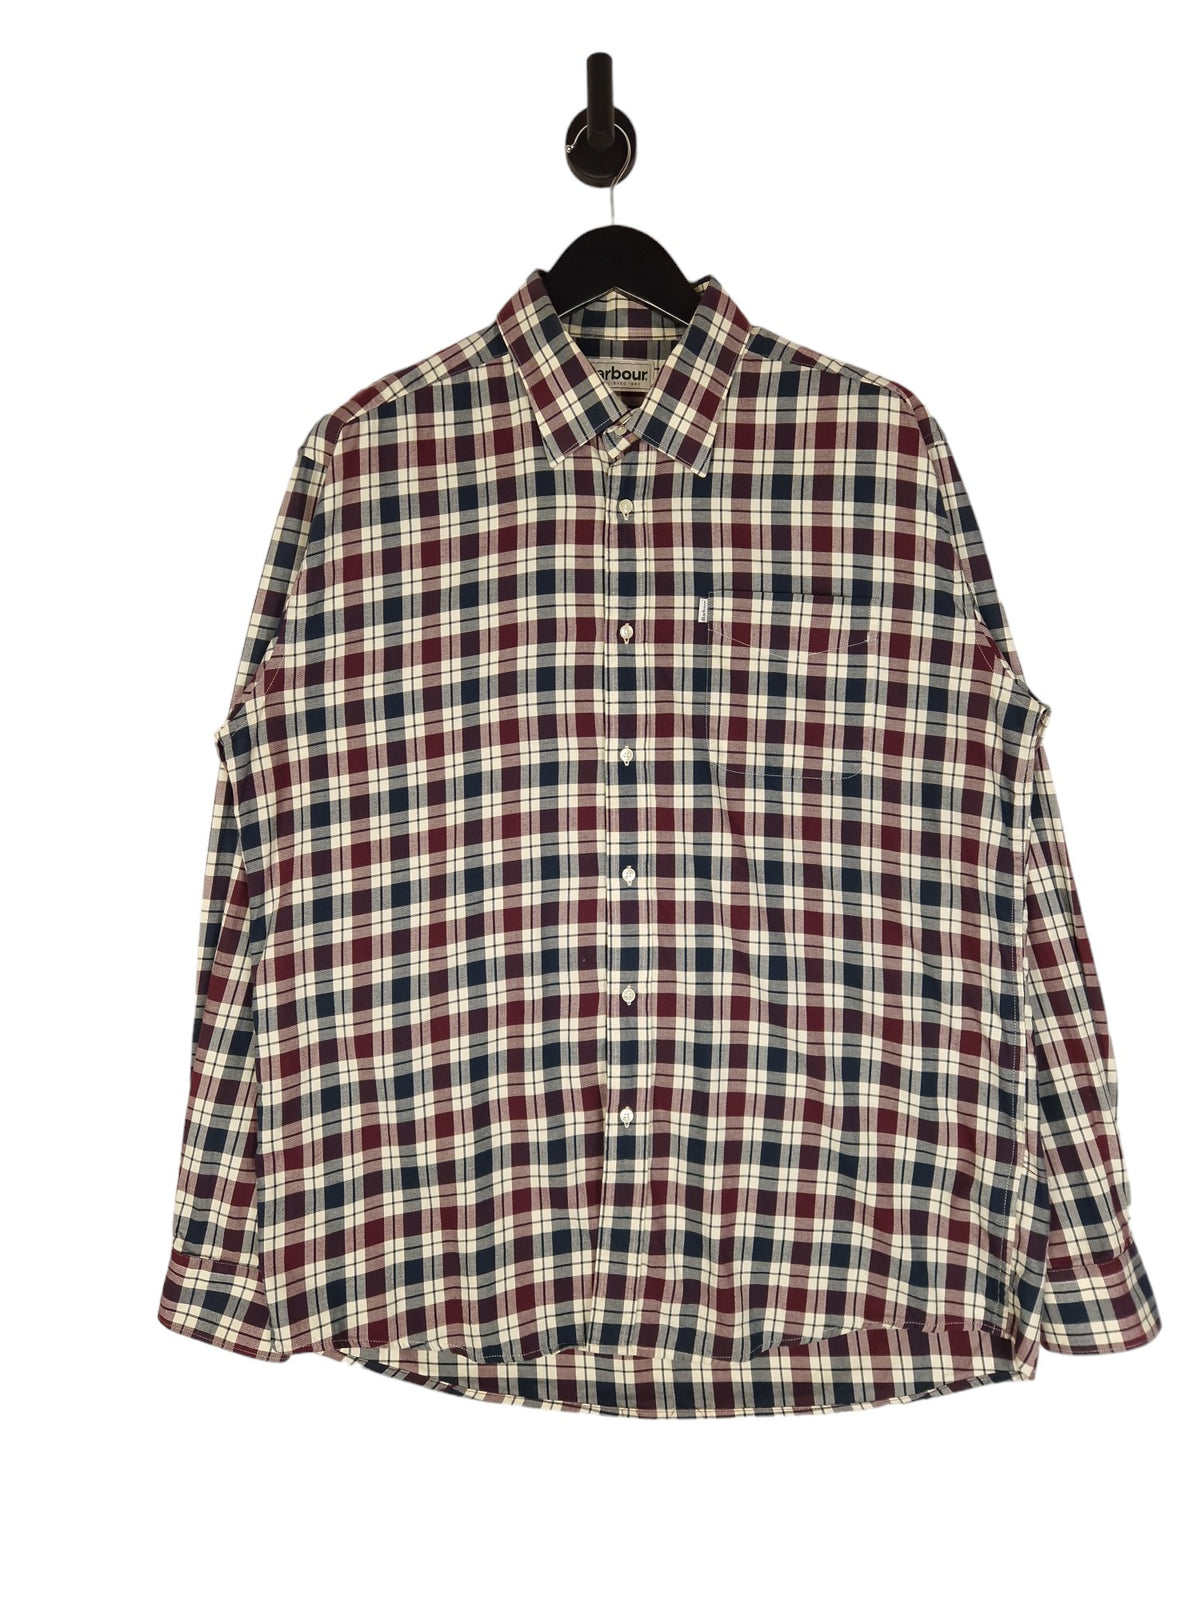 Barbour Astwell Plaid Shirt - Size XL